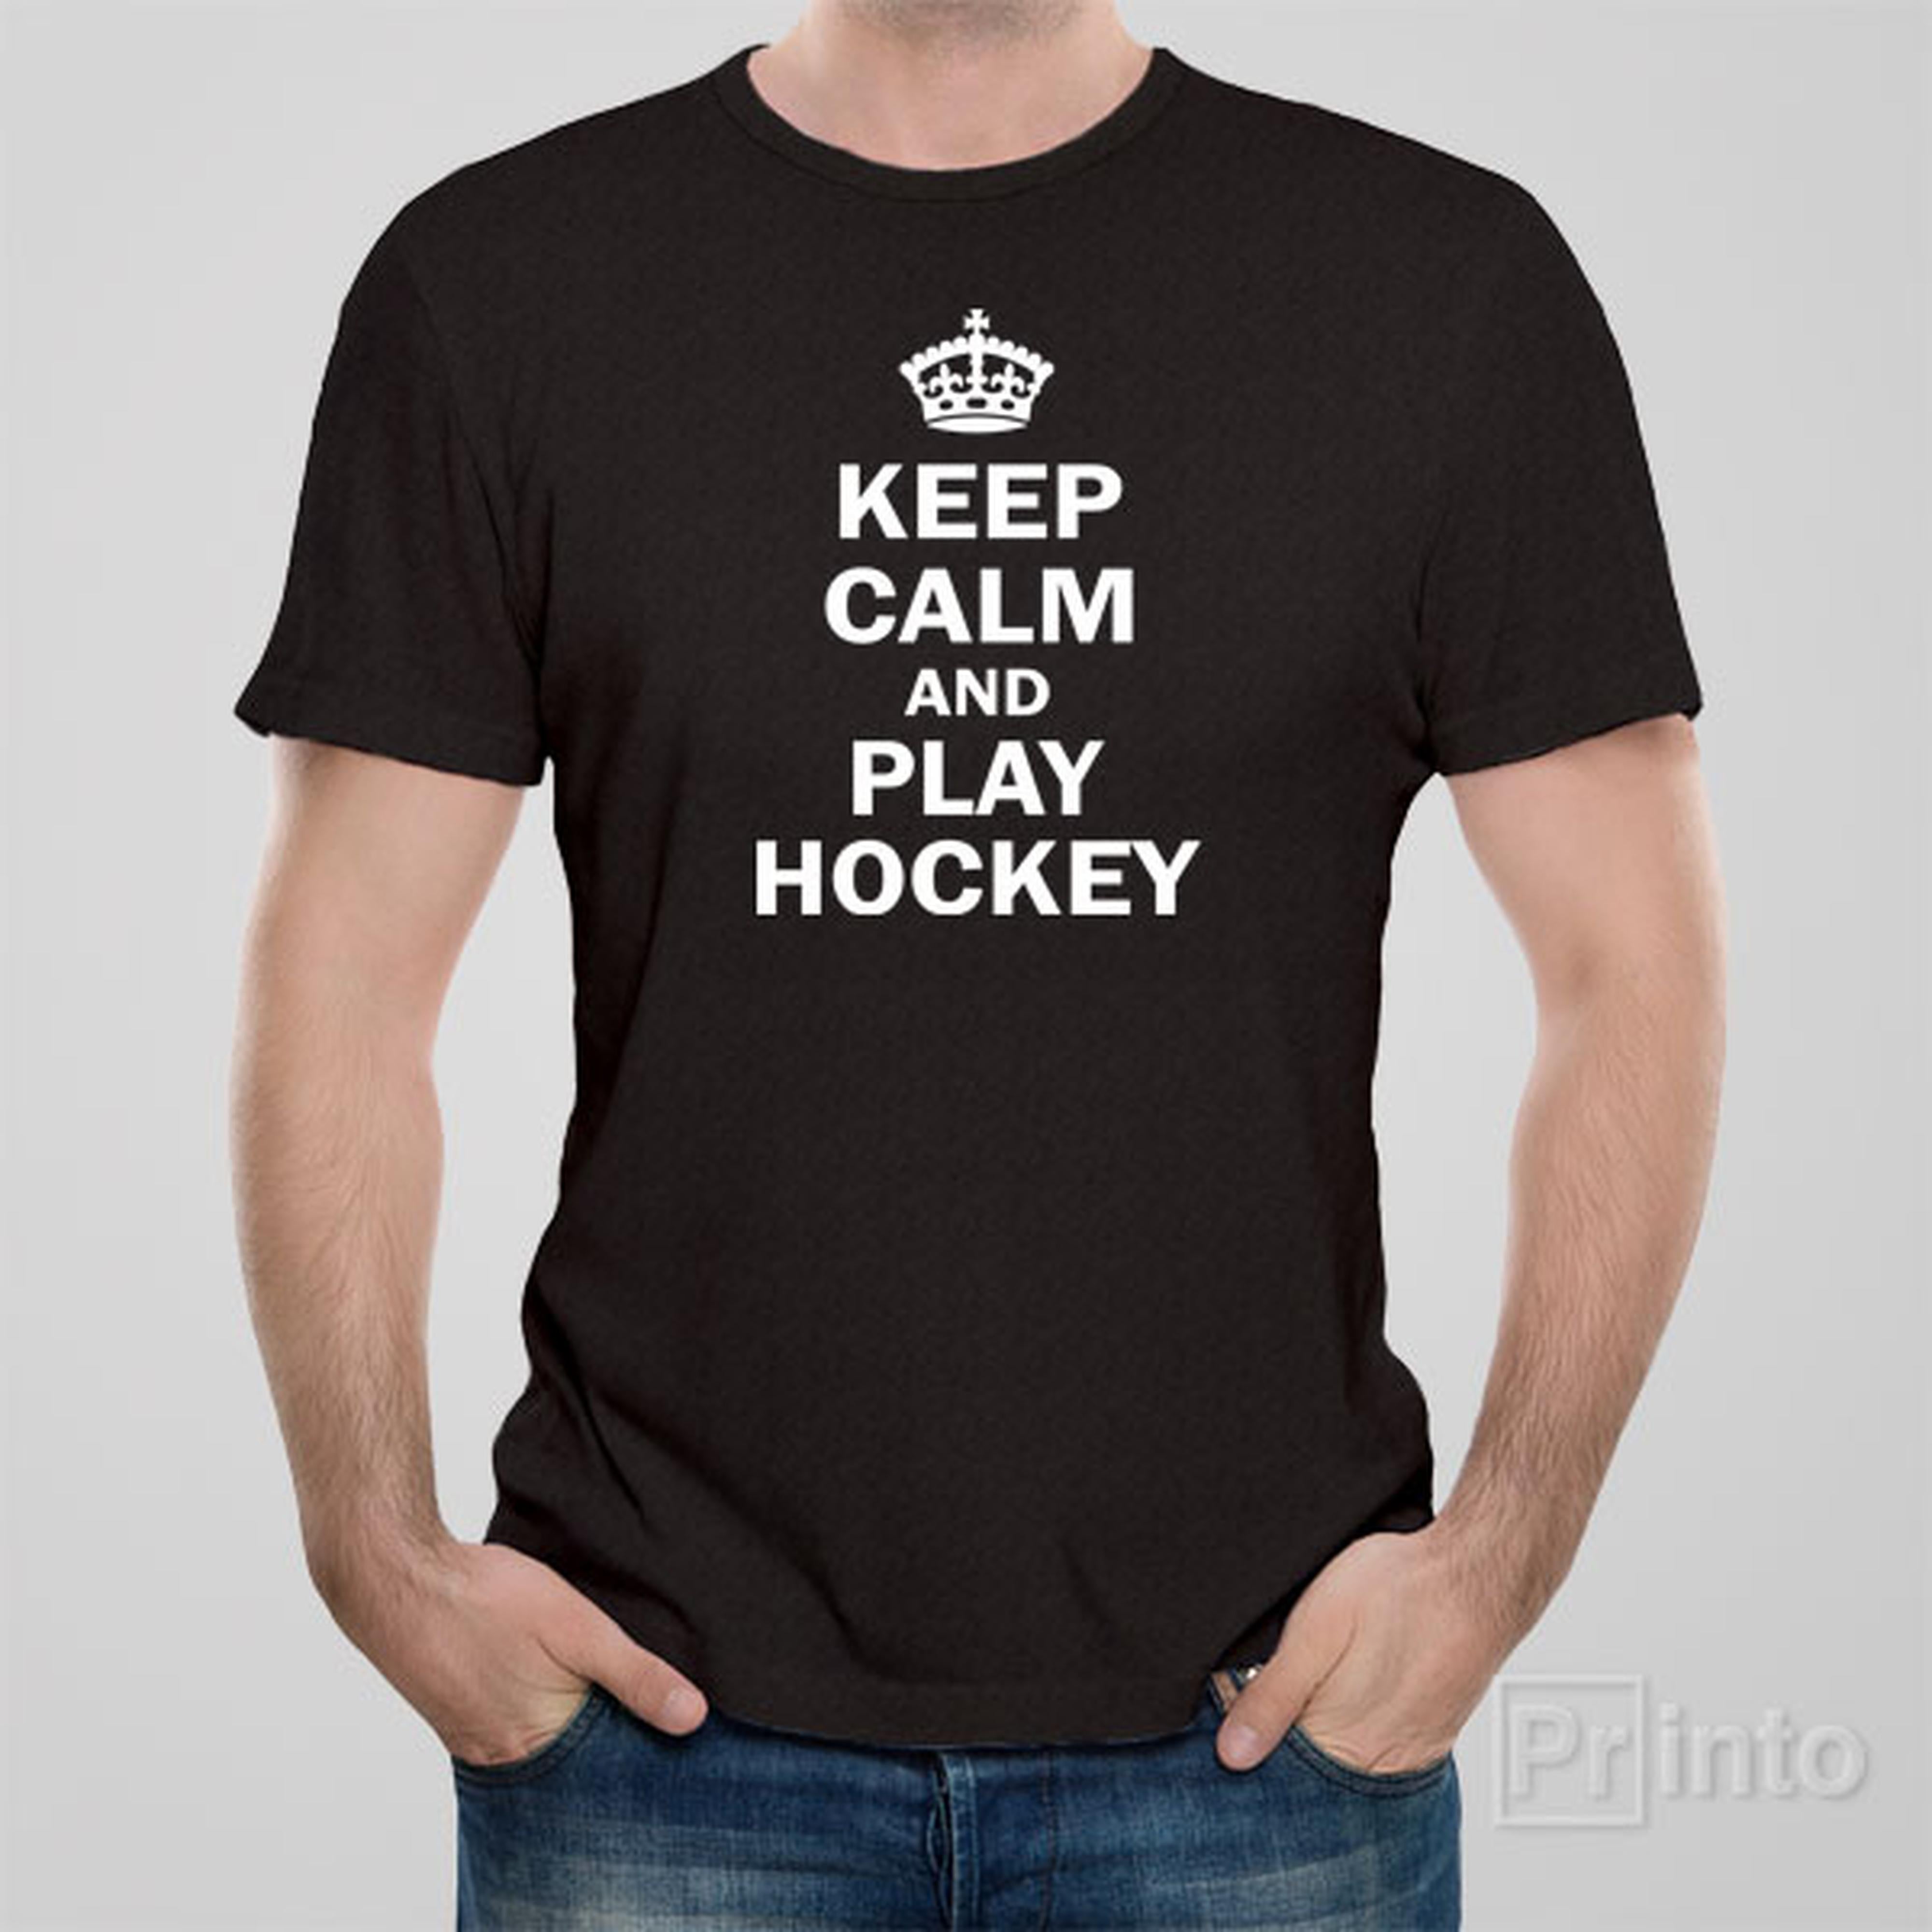 keep-calm-and-play-hockey-t-shirt